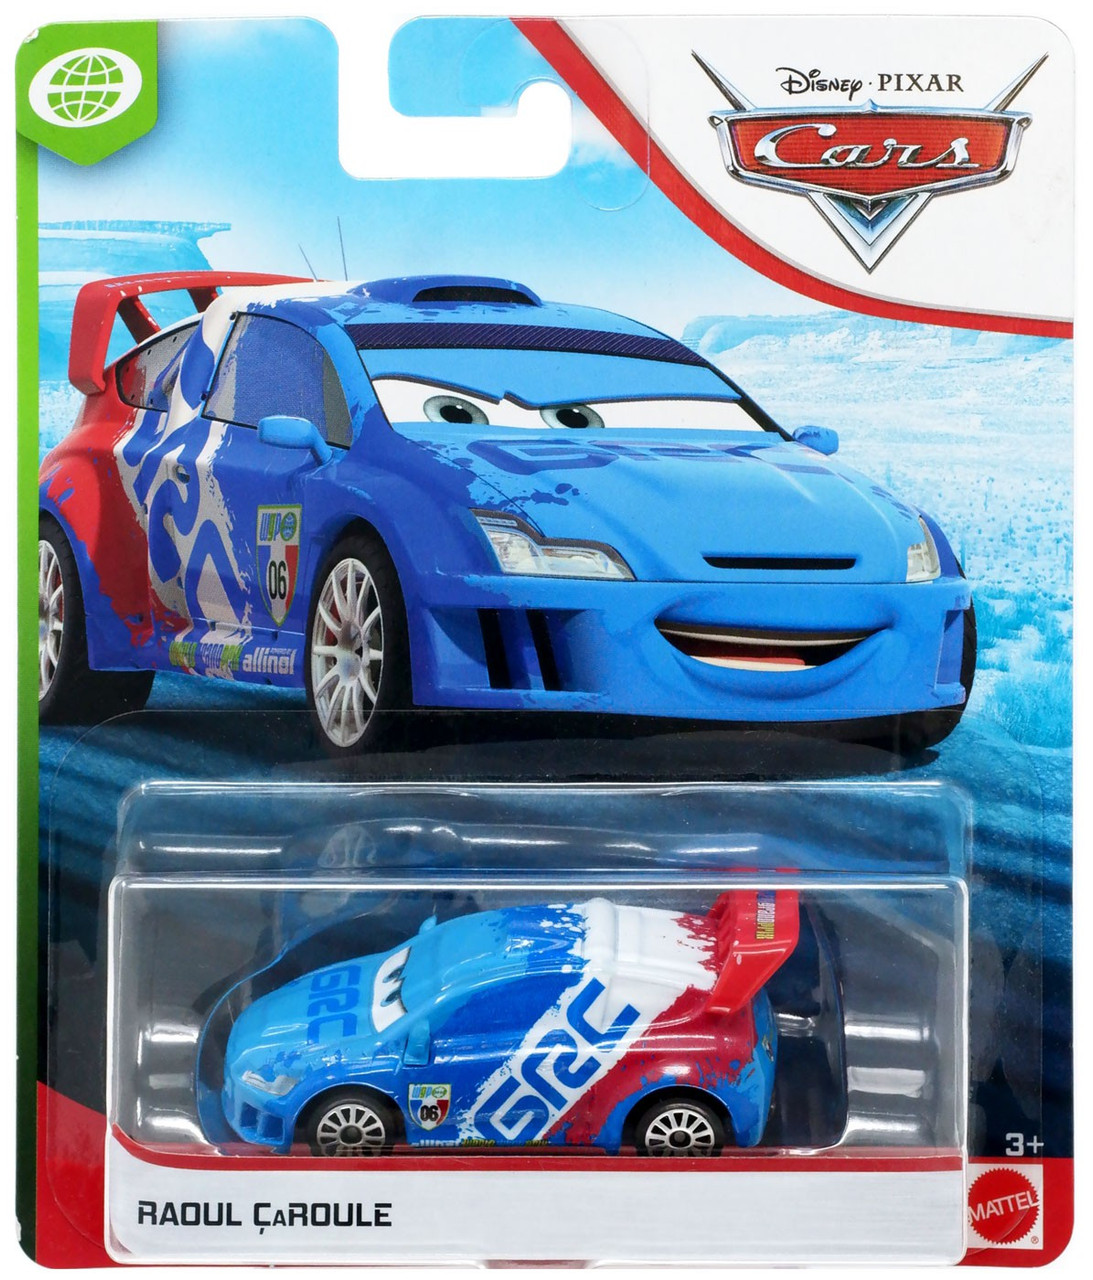 Disney Pixar Cars Cars 3 Wgp Raoul Caroule 155 Diecast Car Version 2 Mattel Toys Toywiz - roblox disney car 2